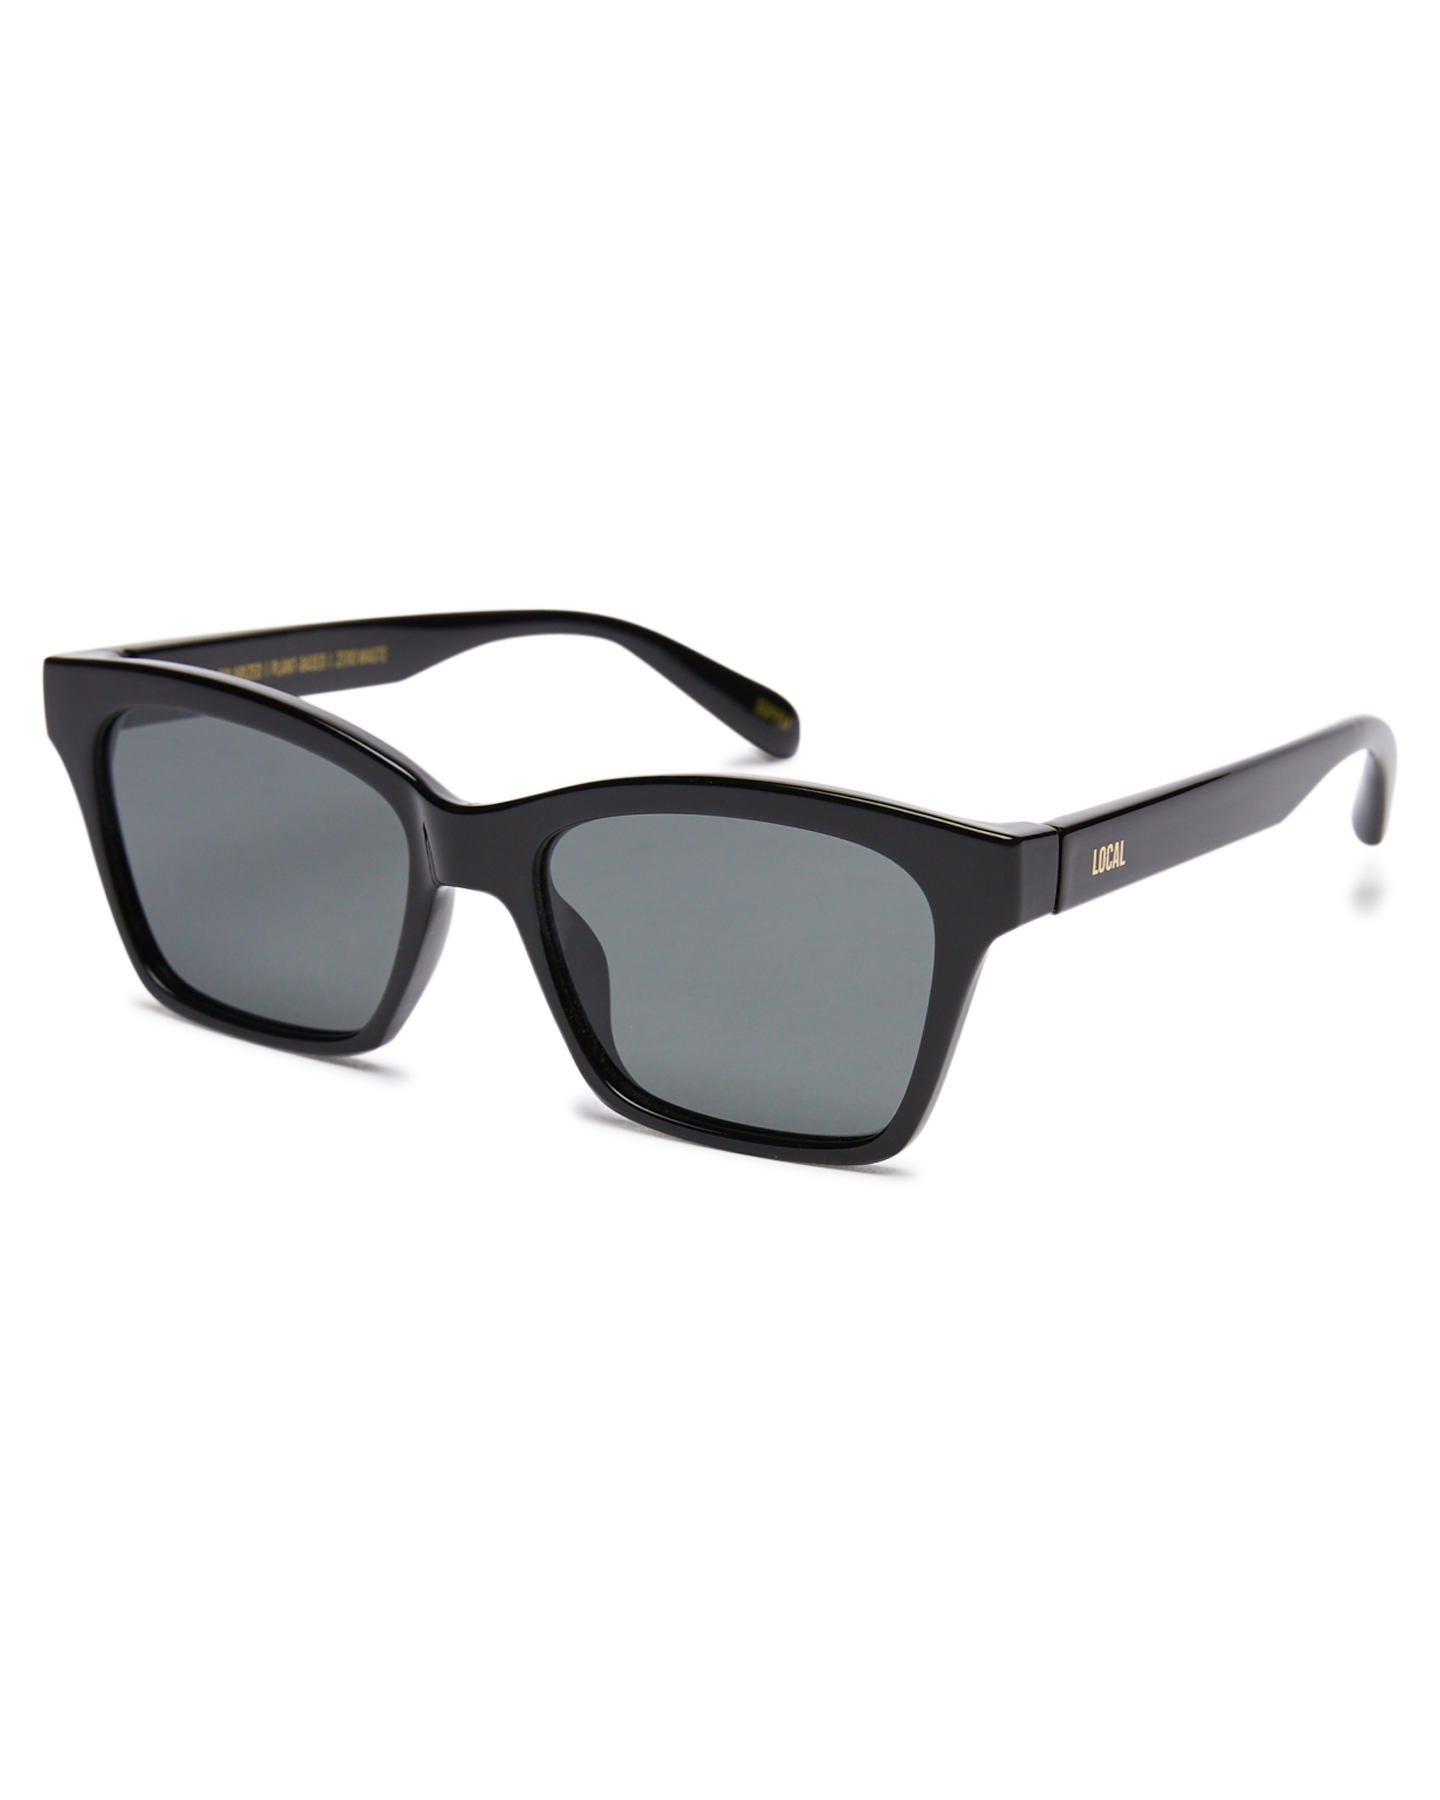 Local Supply Sto Sunglasses - Gloss Black | SurfStitch